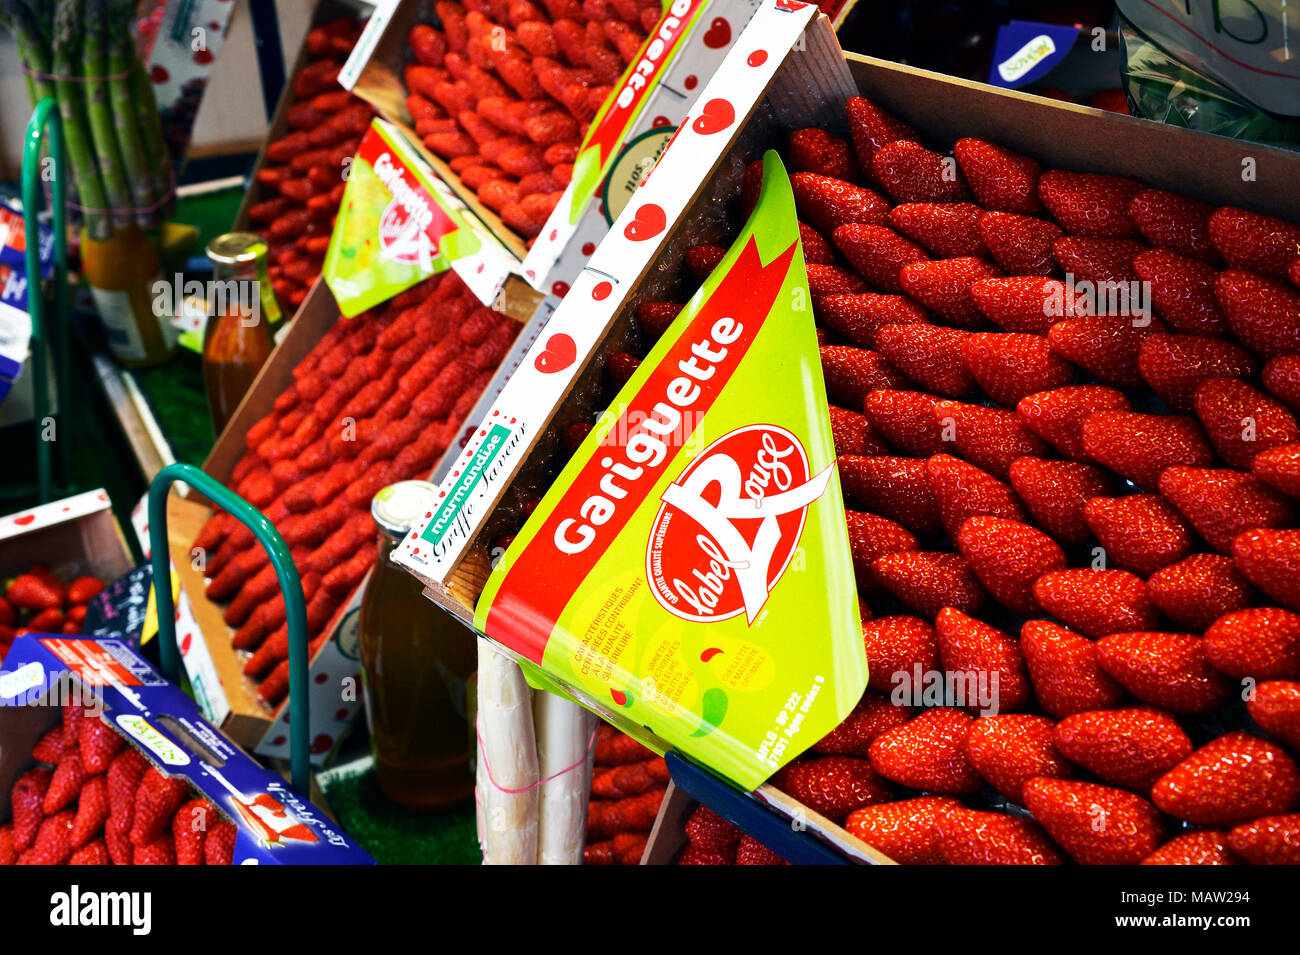 Fruit and vegetable seller - Rue des Martyrs - Paris - France Stock Photo